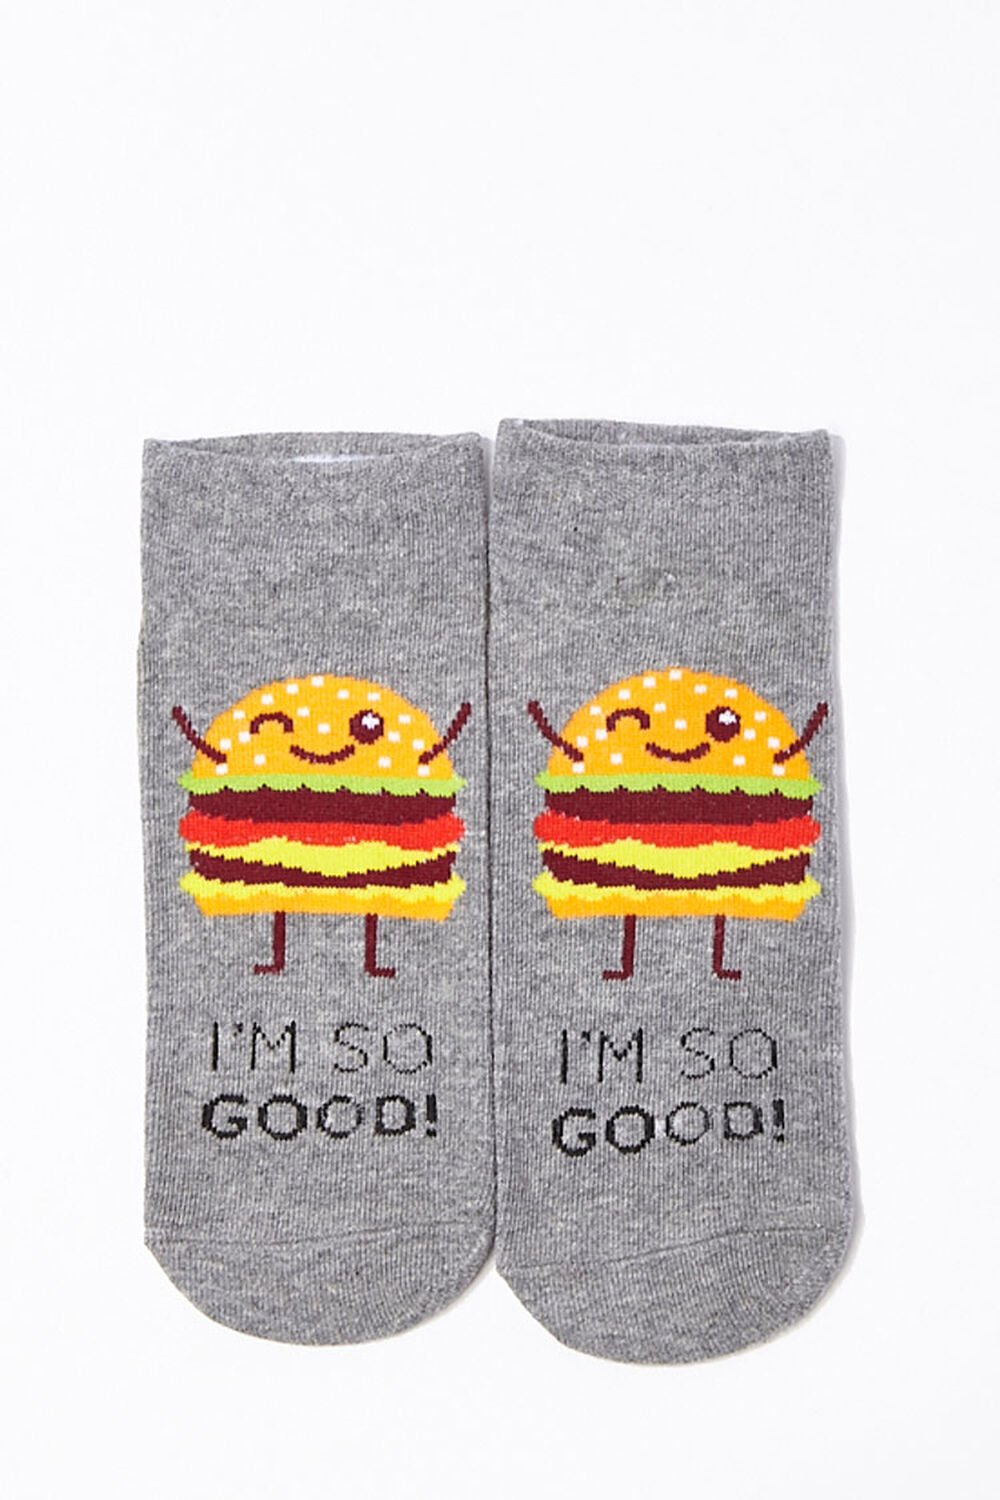 HEATHER GREY/MULTI Hamburger Graphic Ankle Socks, image 1